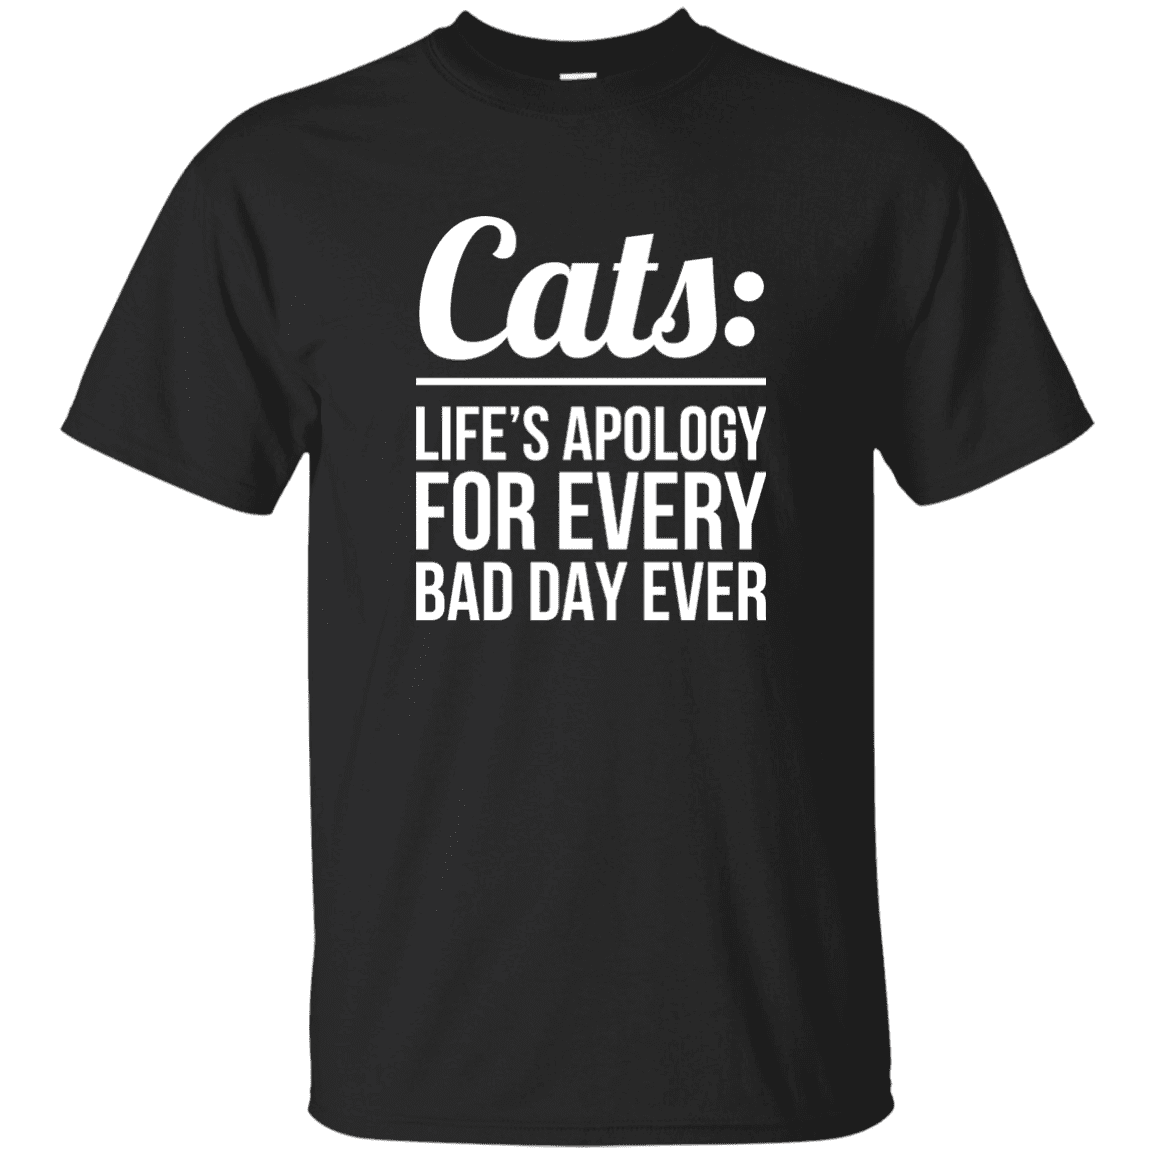 Cats Life's Apology - T Shirt.